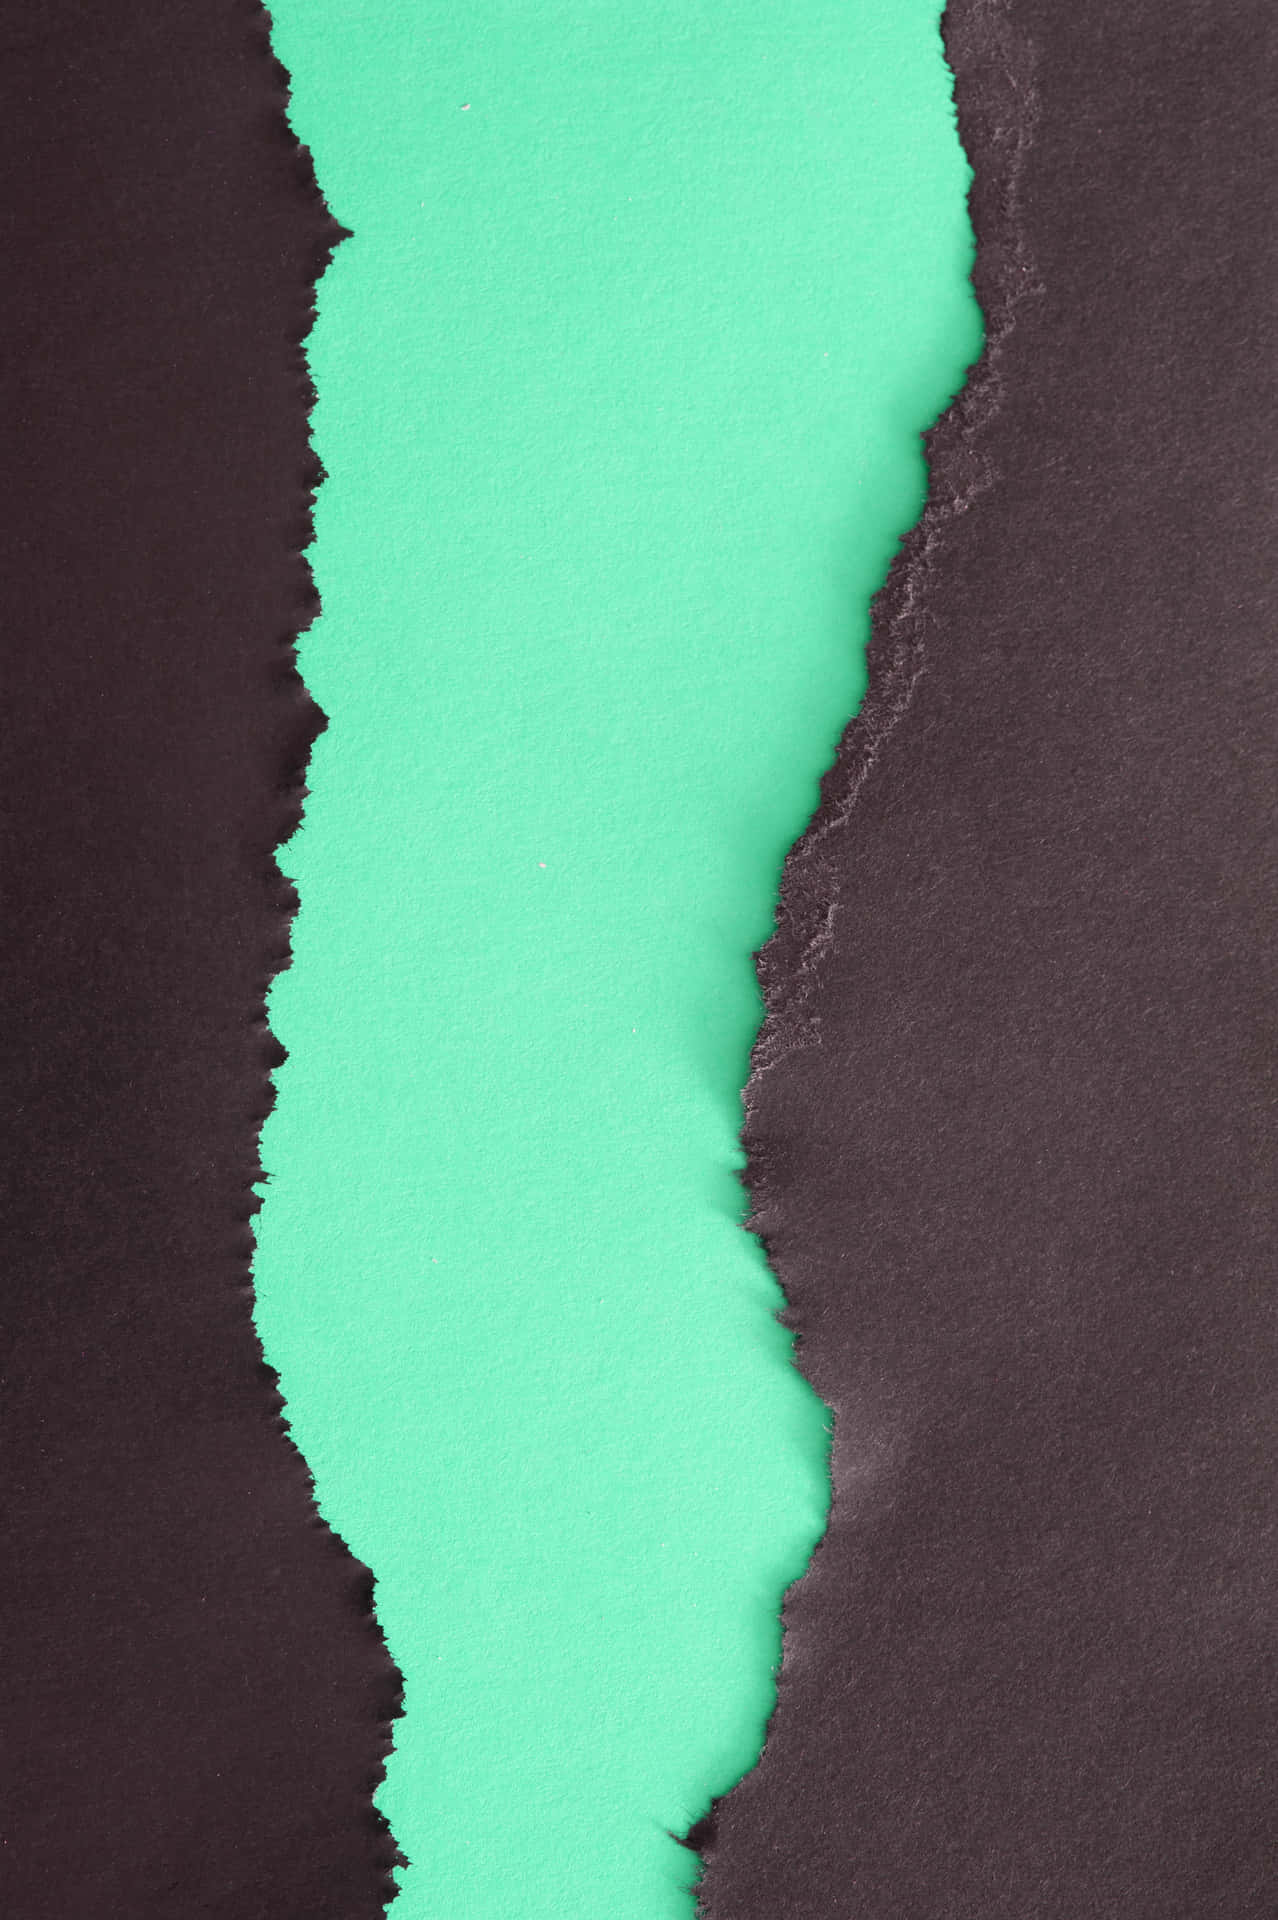 Black Torn Paper On Blue-green Background Wallpaper